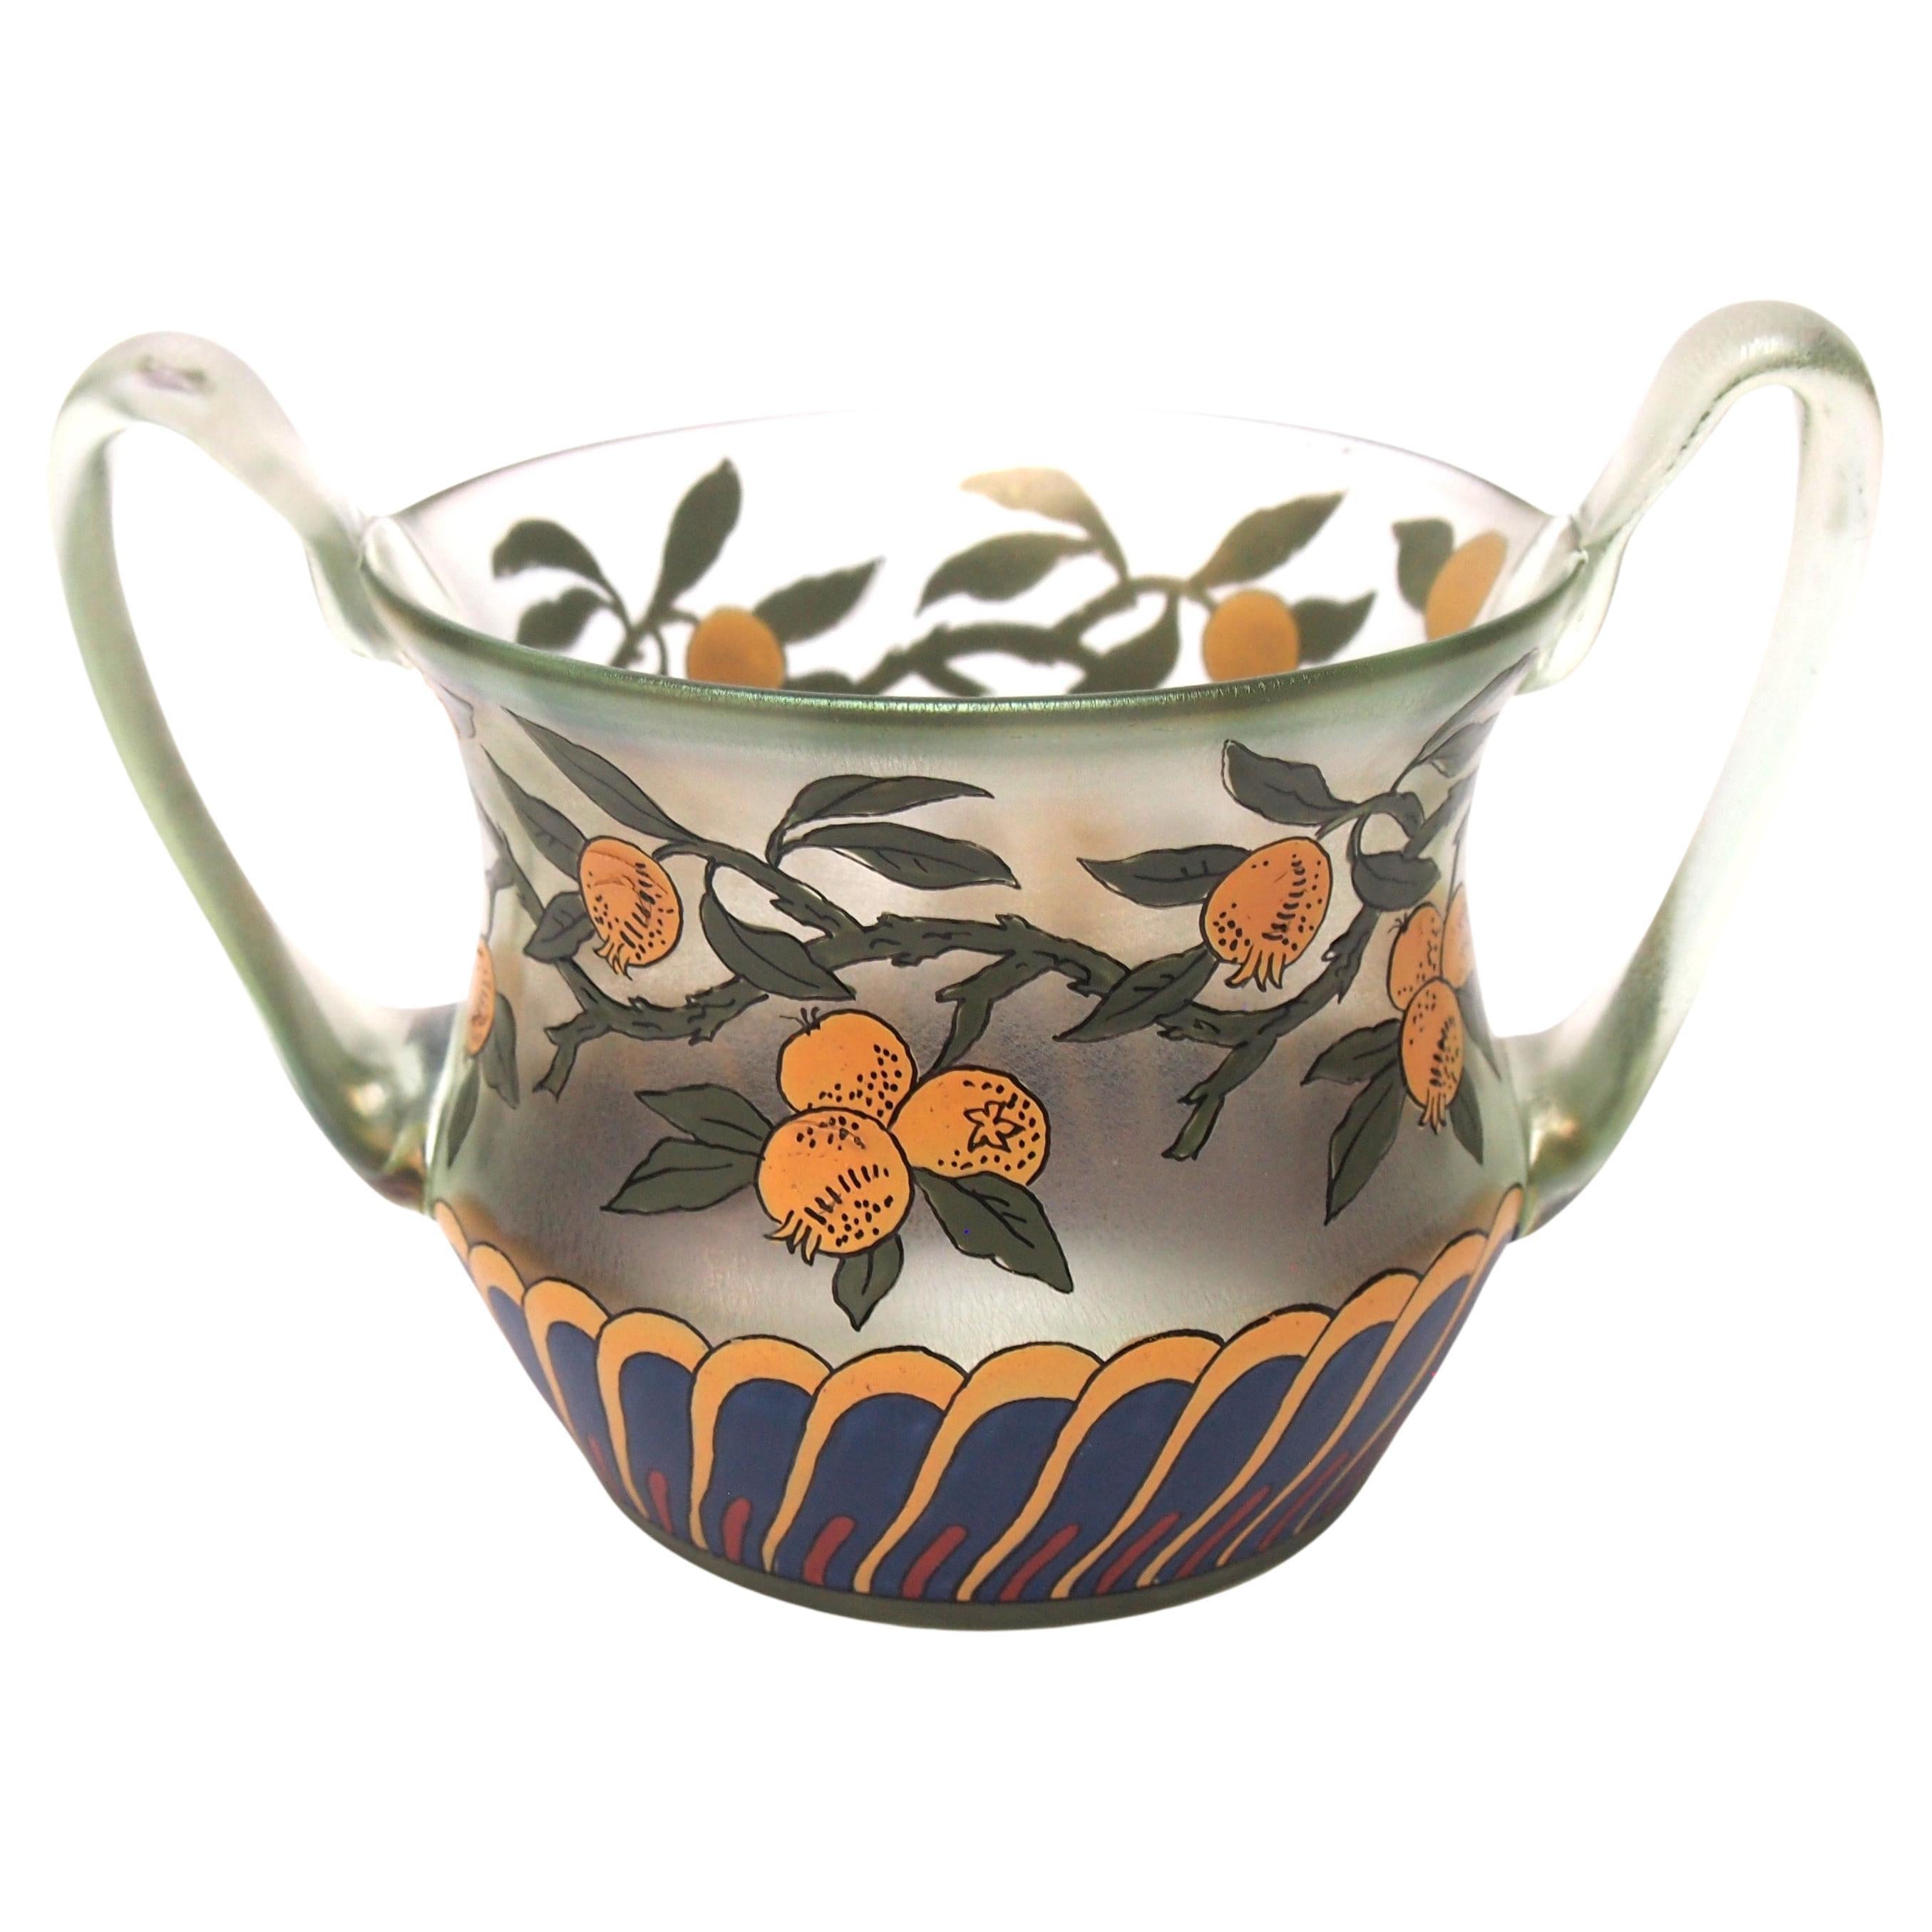 Fritz Heckert Pomegranate Enamelled 2 handled glass vase design by Max Rade 1900